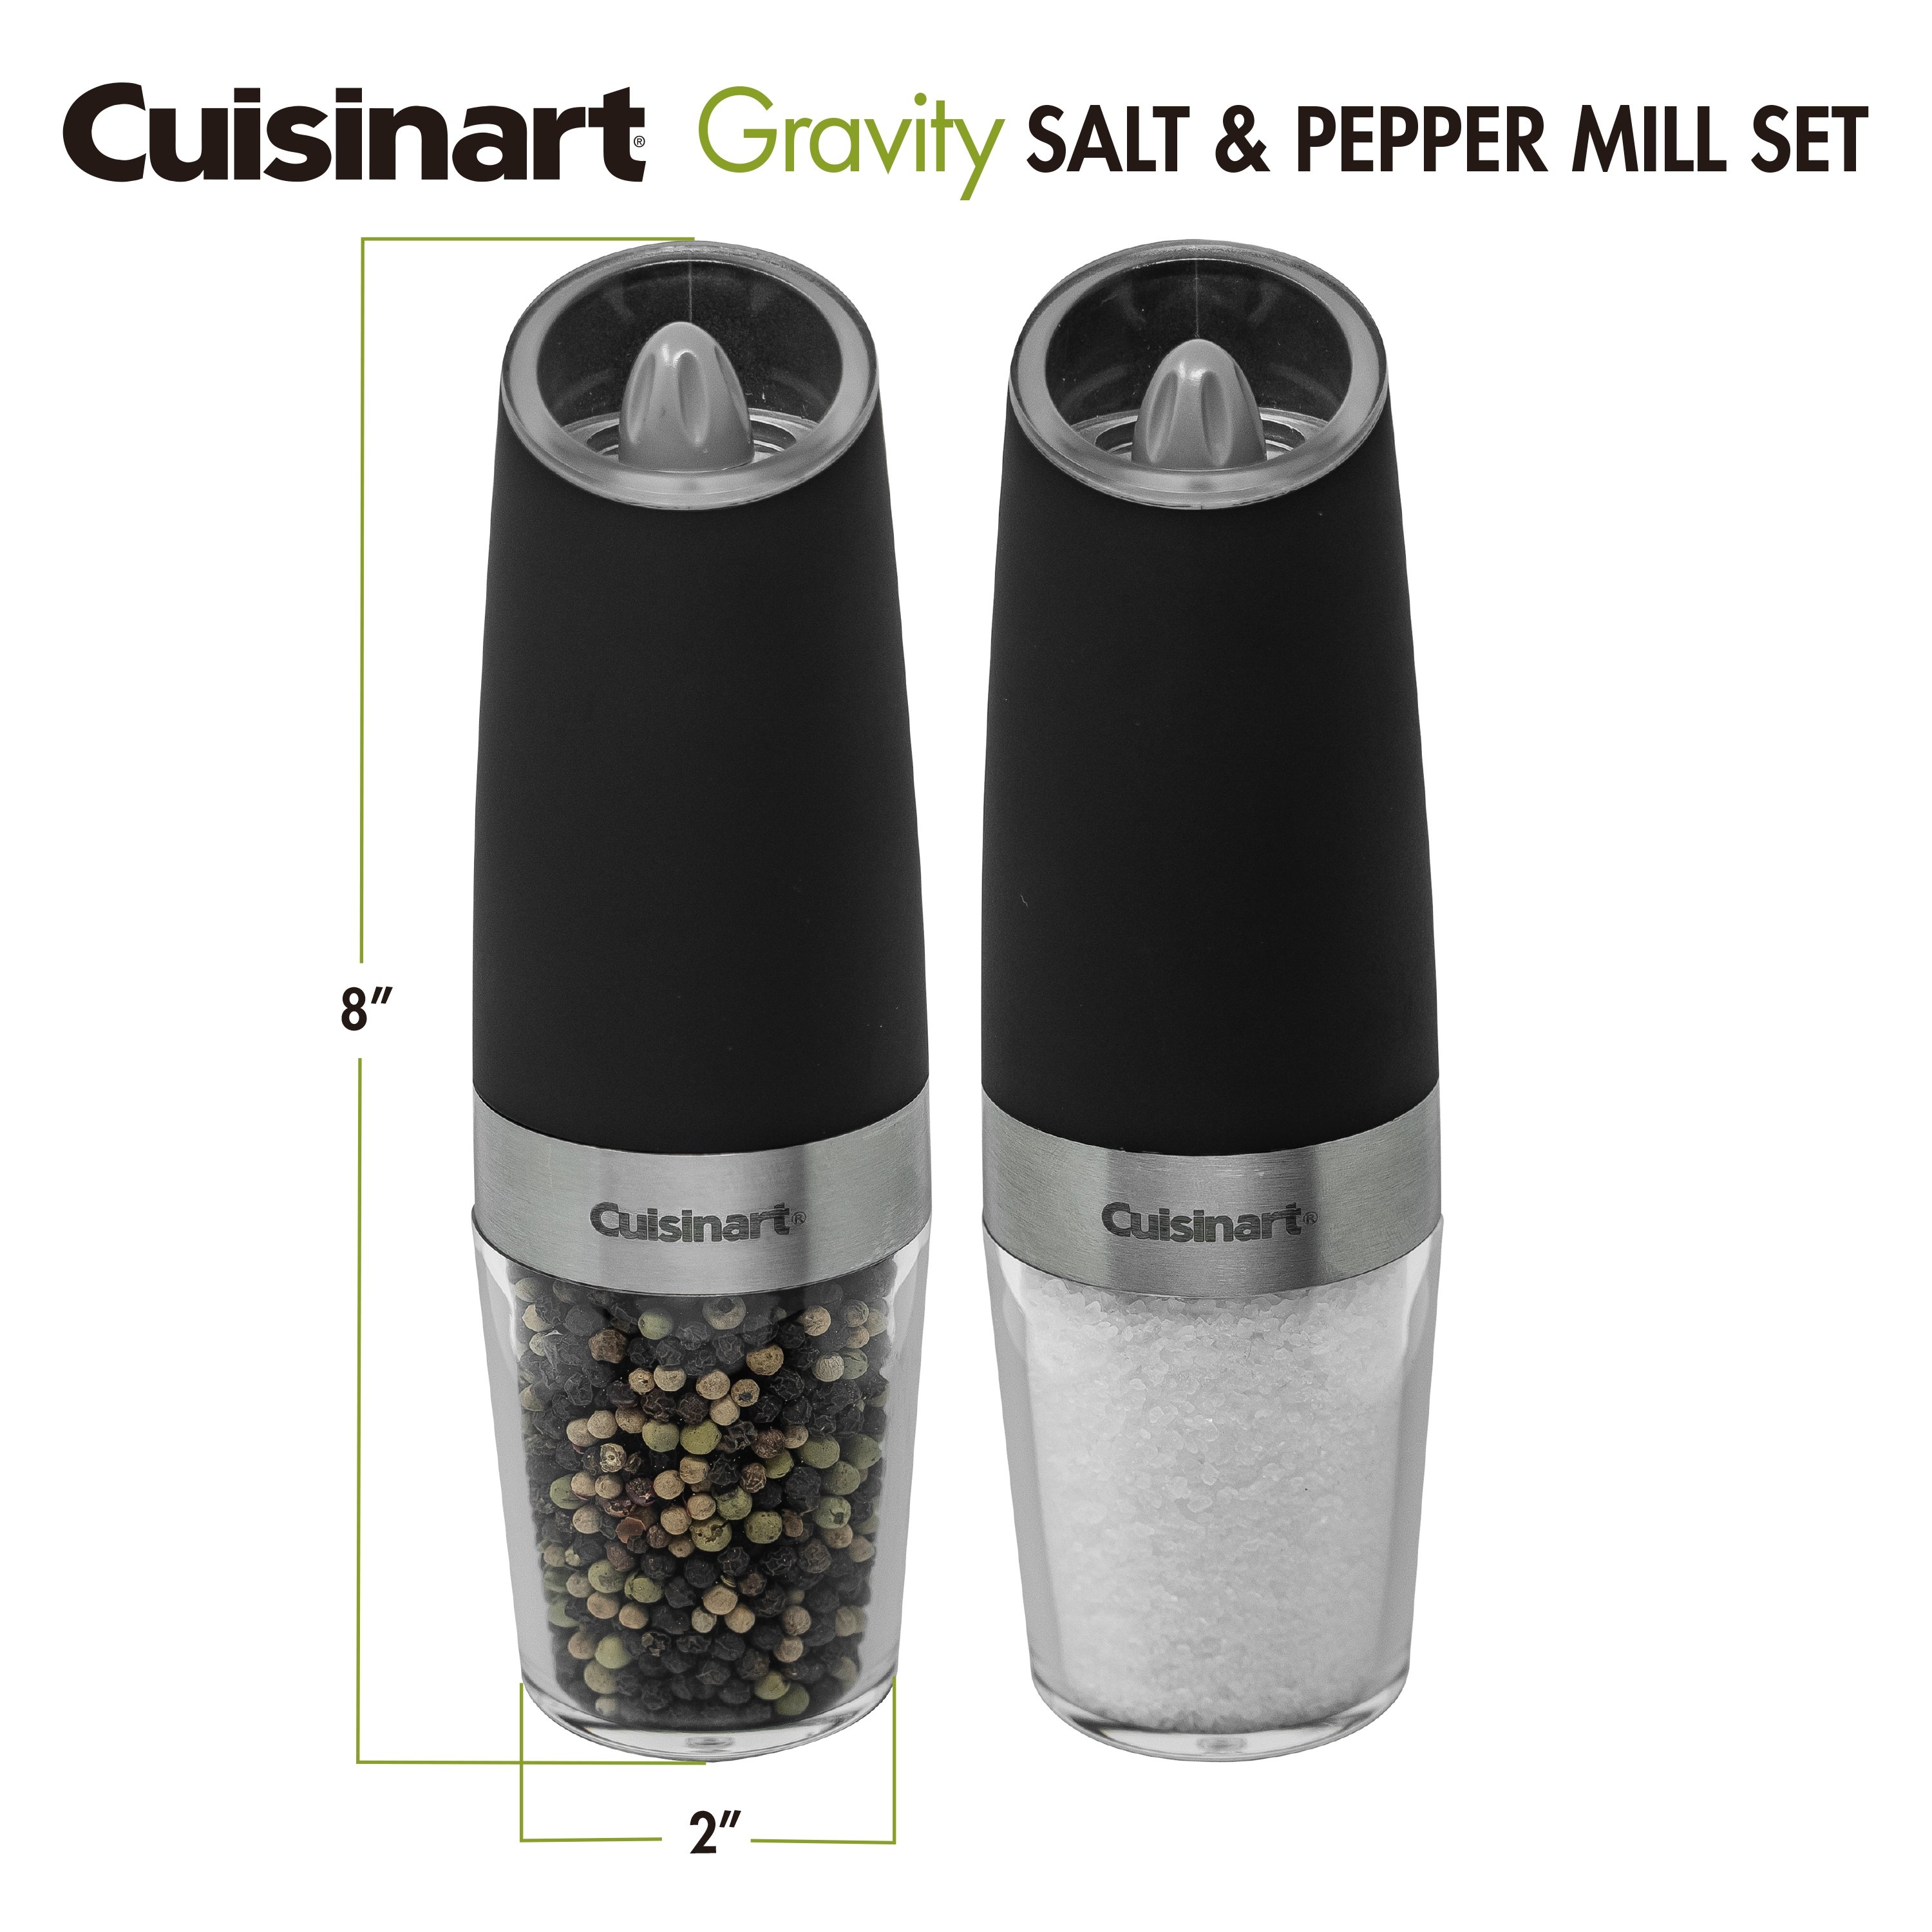 Gravity Electric Salt and Pepper Grinder Set - Automatic Pepper or Salt Mill  Shaker